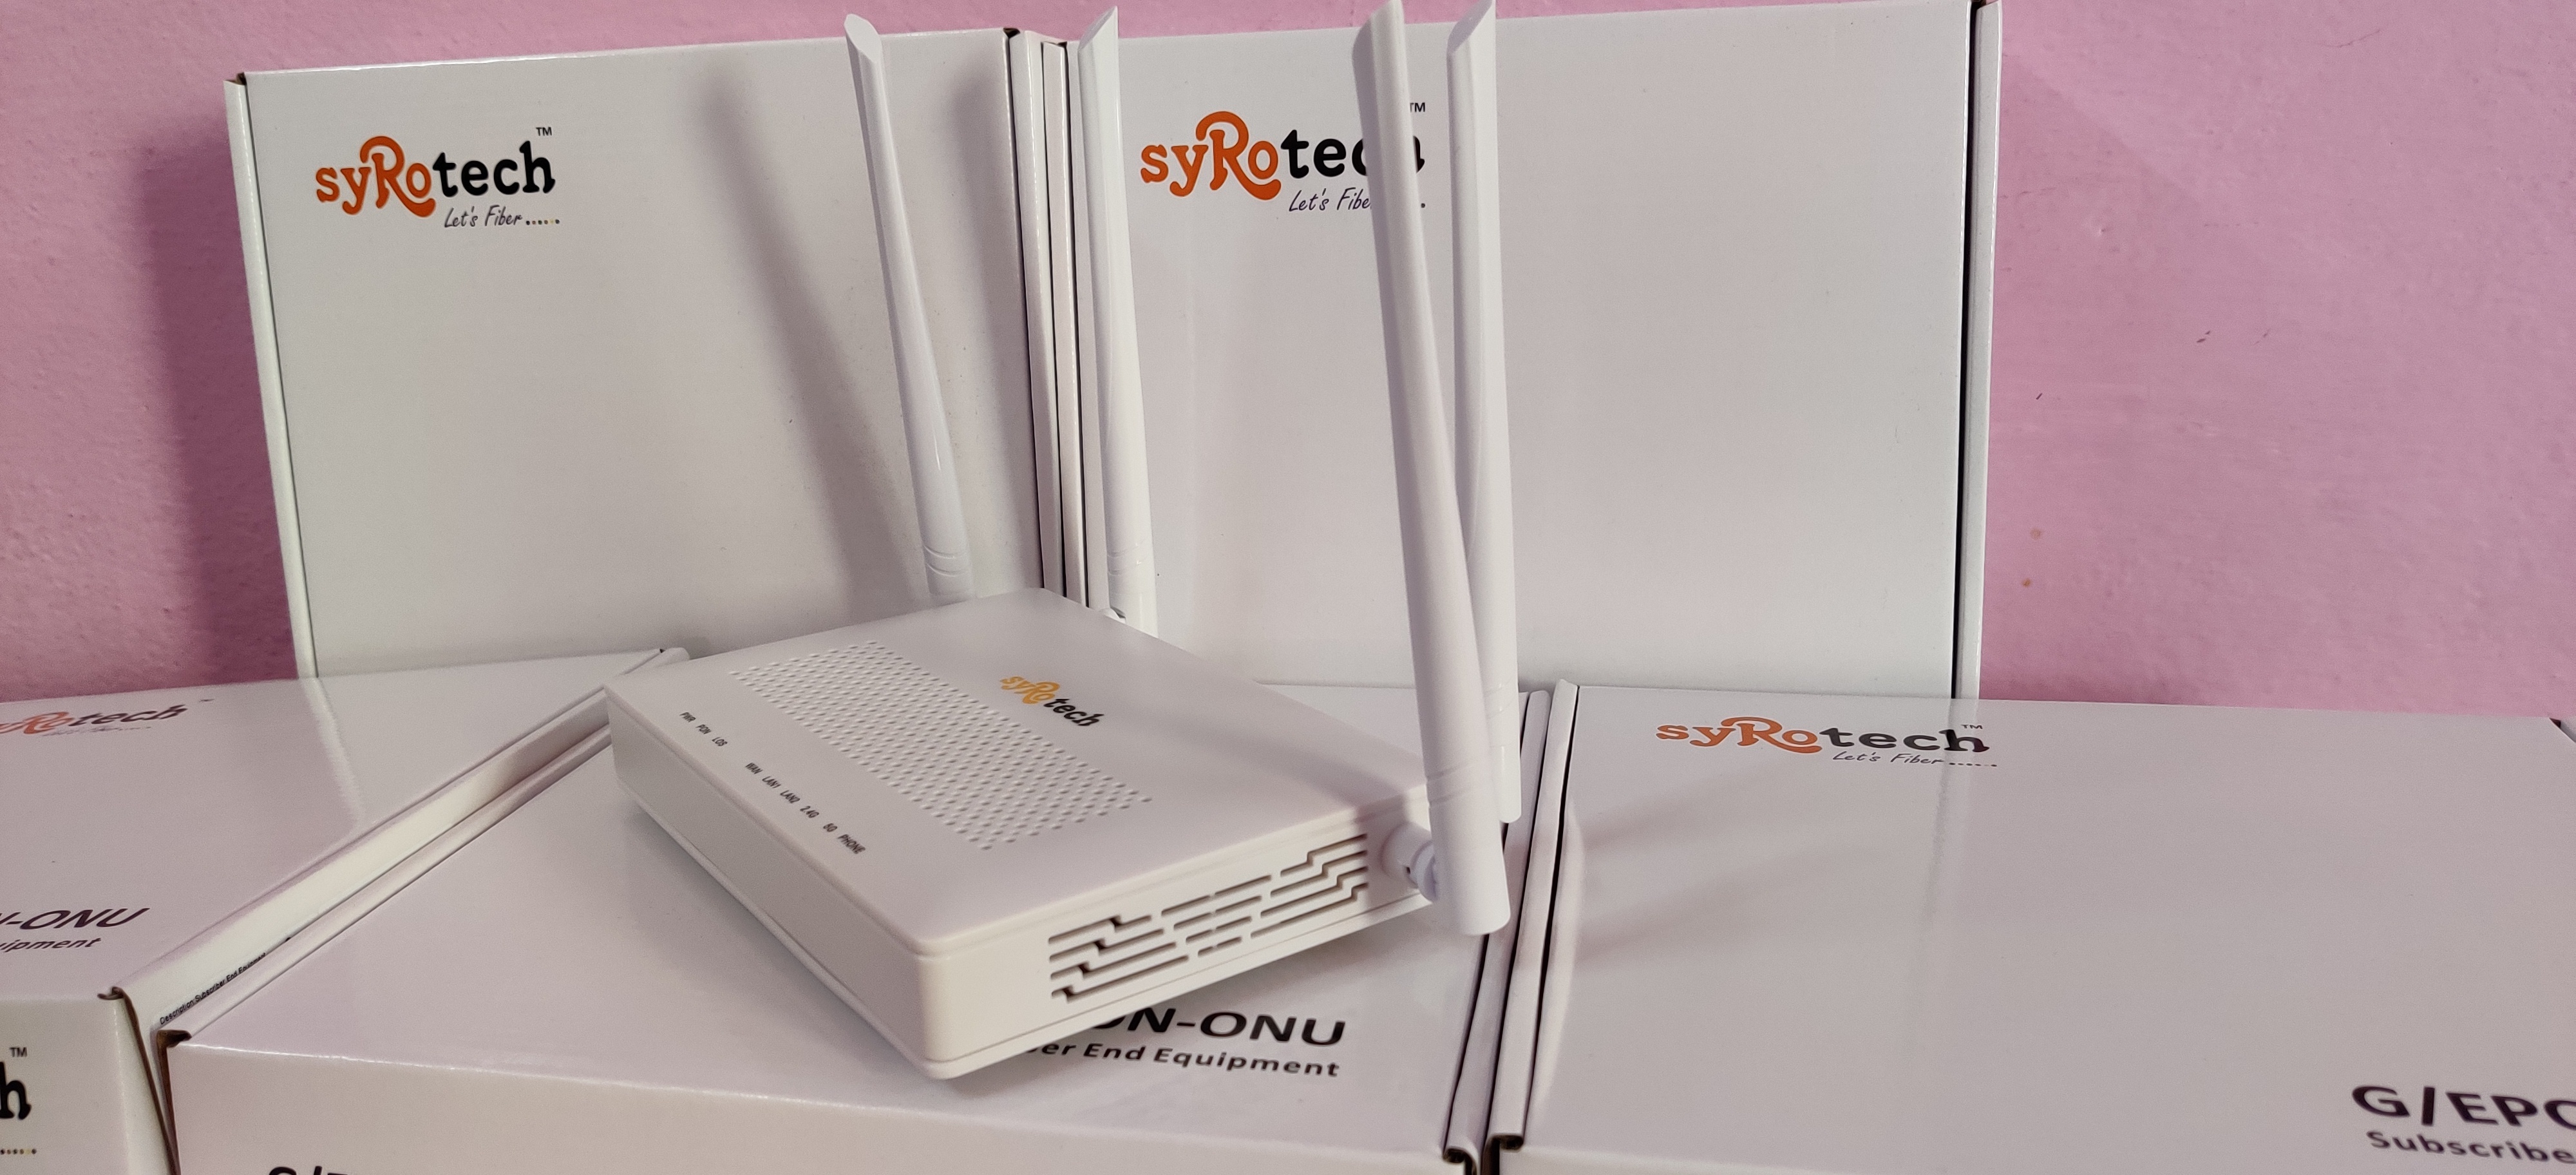 SyRotech Dual Band Wifi modem XPON